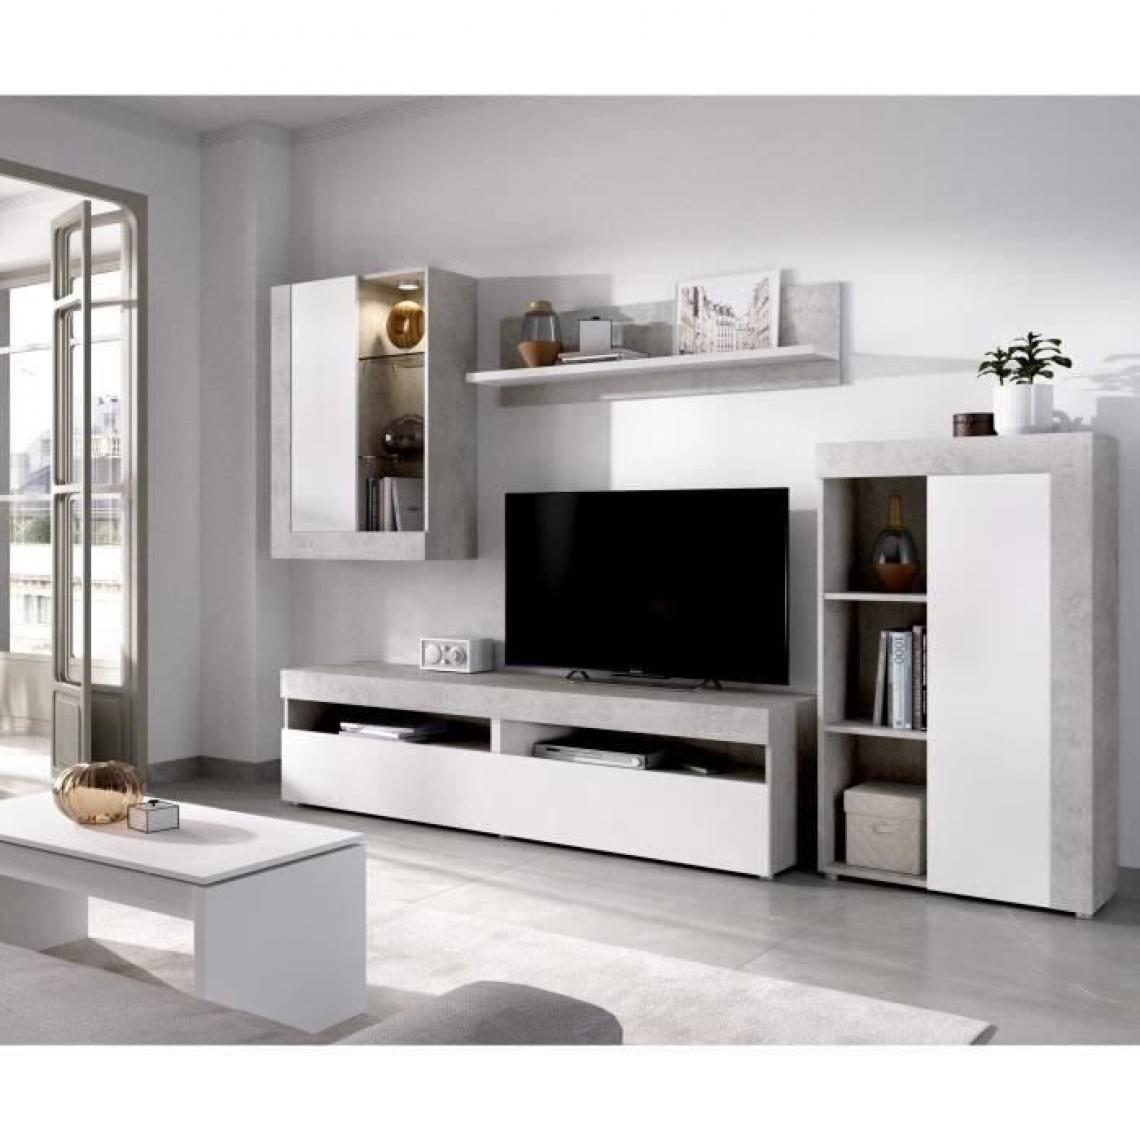 Cstore - CSTORE - ensemble meuble tv blanc et béton - l 265xp 42xh 180 cm - tokio - Meubles TV, Hi-Fi